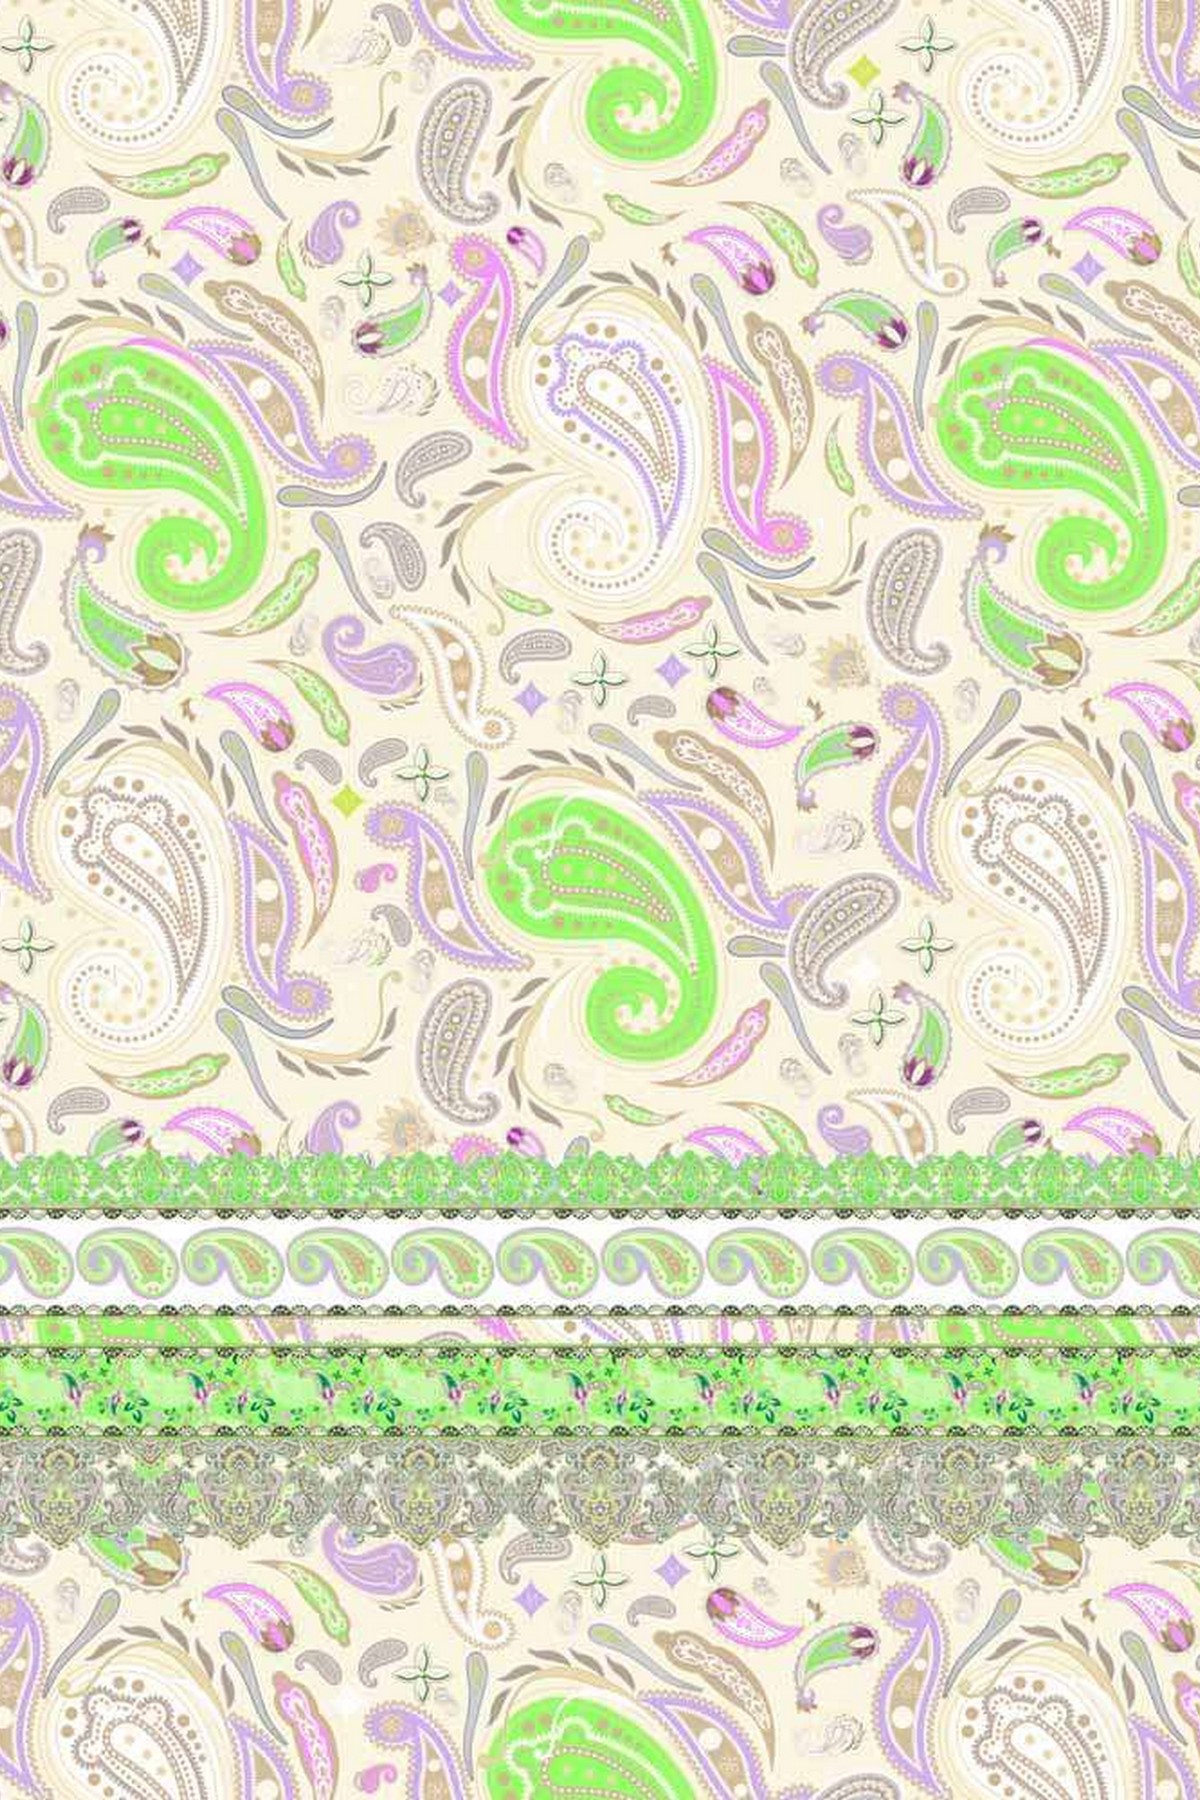 Mucho Gusto - Dress Palau 103 - Kleed kort print V paisley lila groen